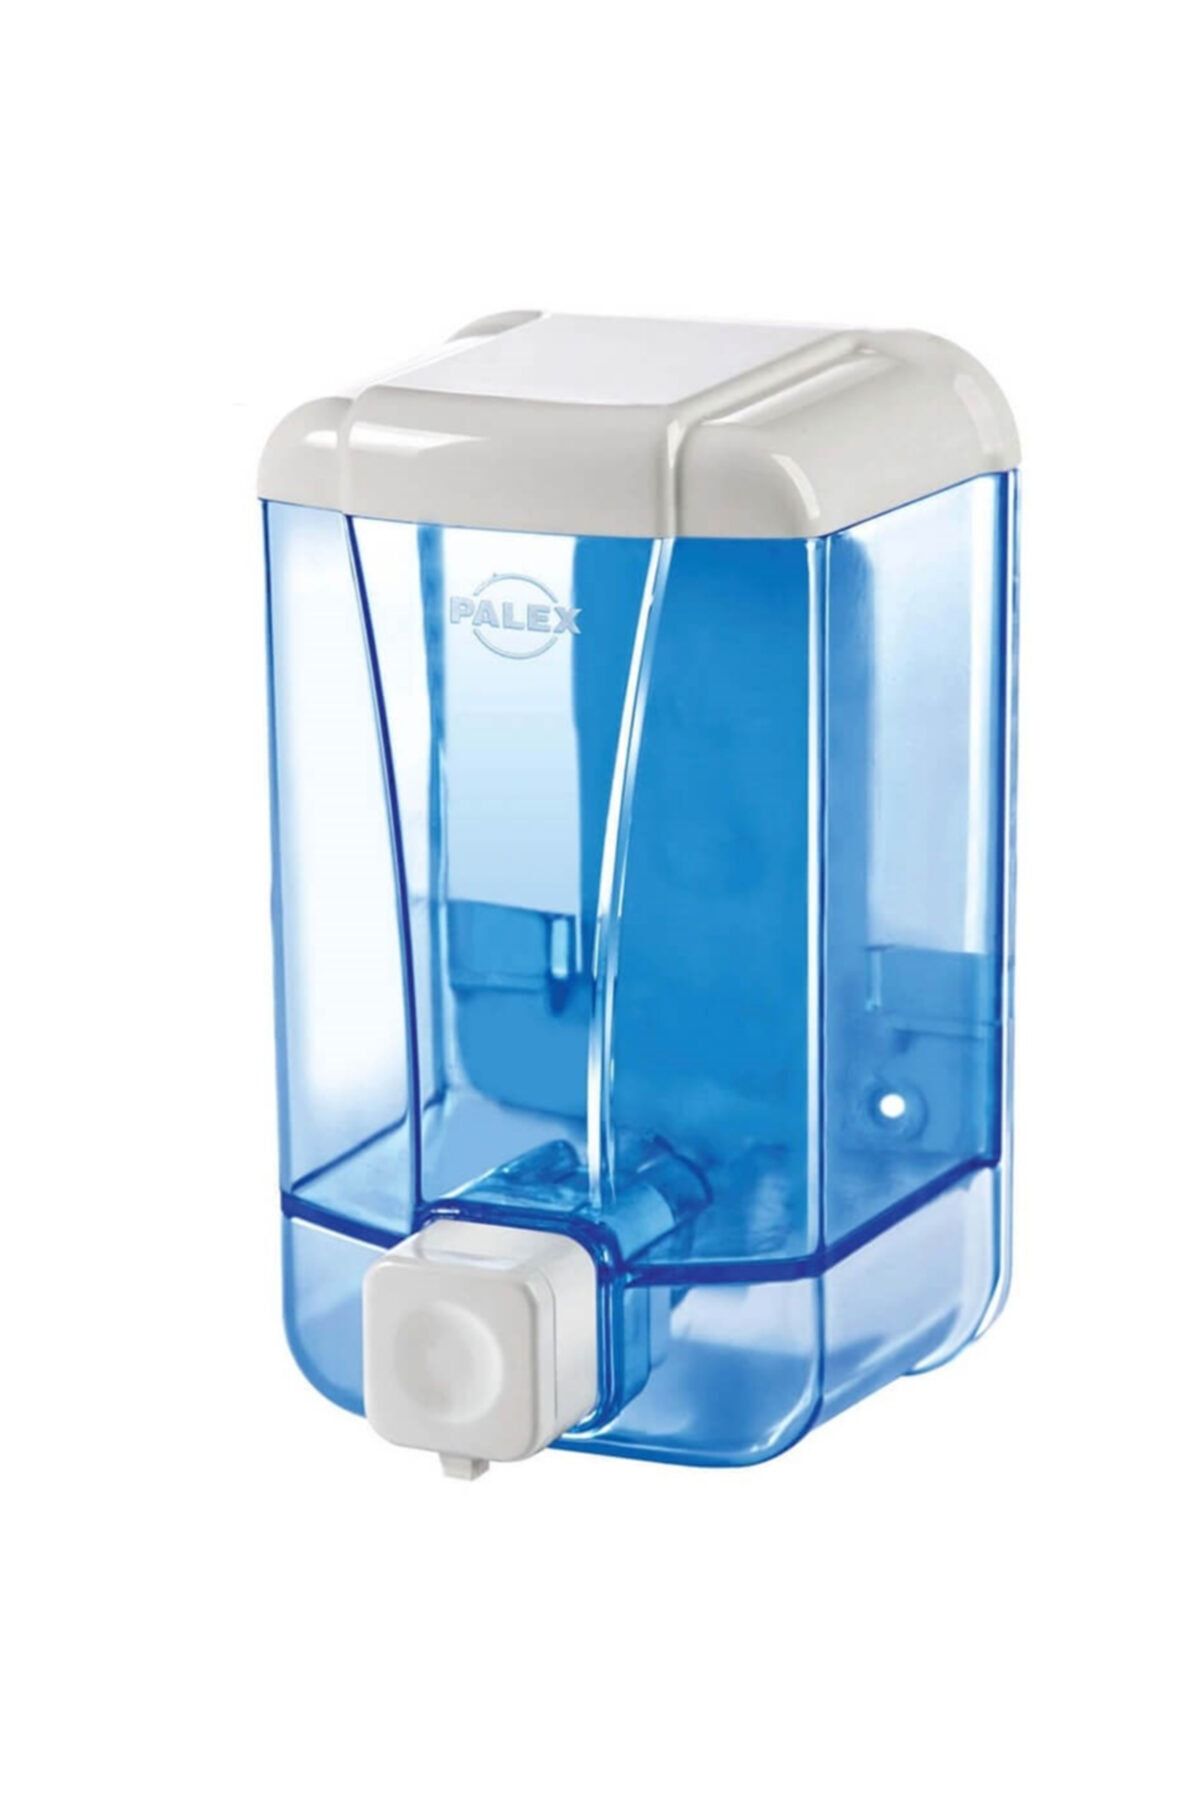 Palex Sıvı Sabun Dispenseri 3420 Tezgah Üstü 500 Cc Şeffaf Mavi